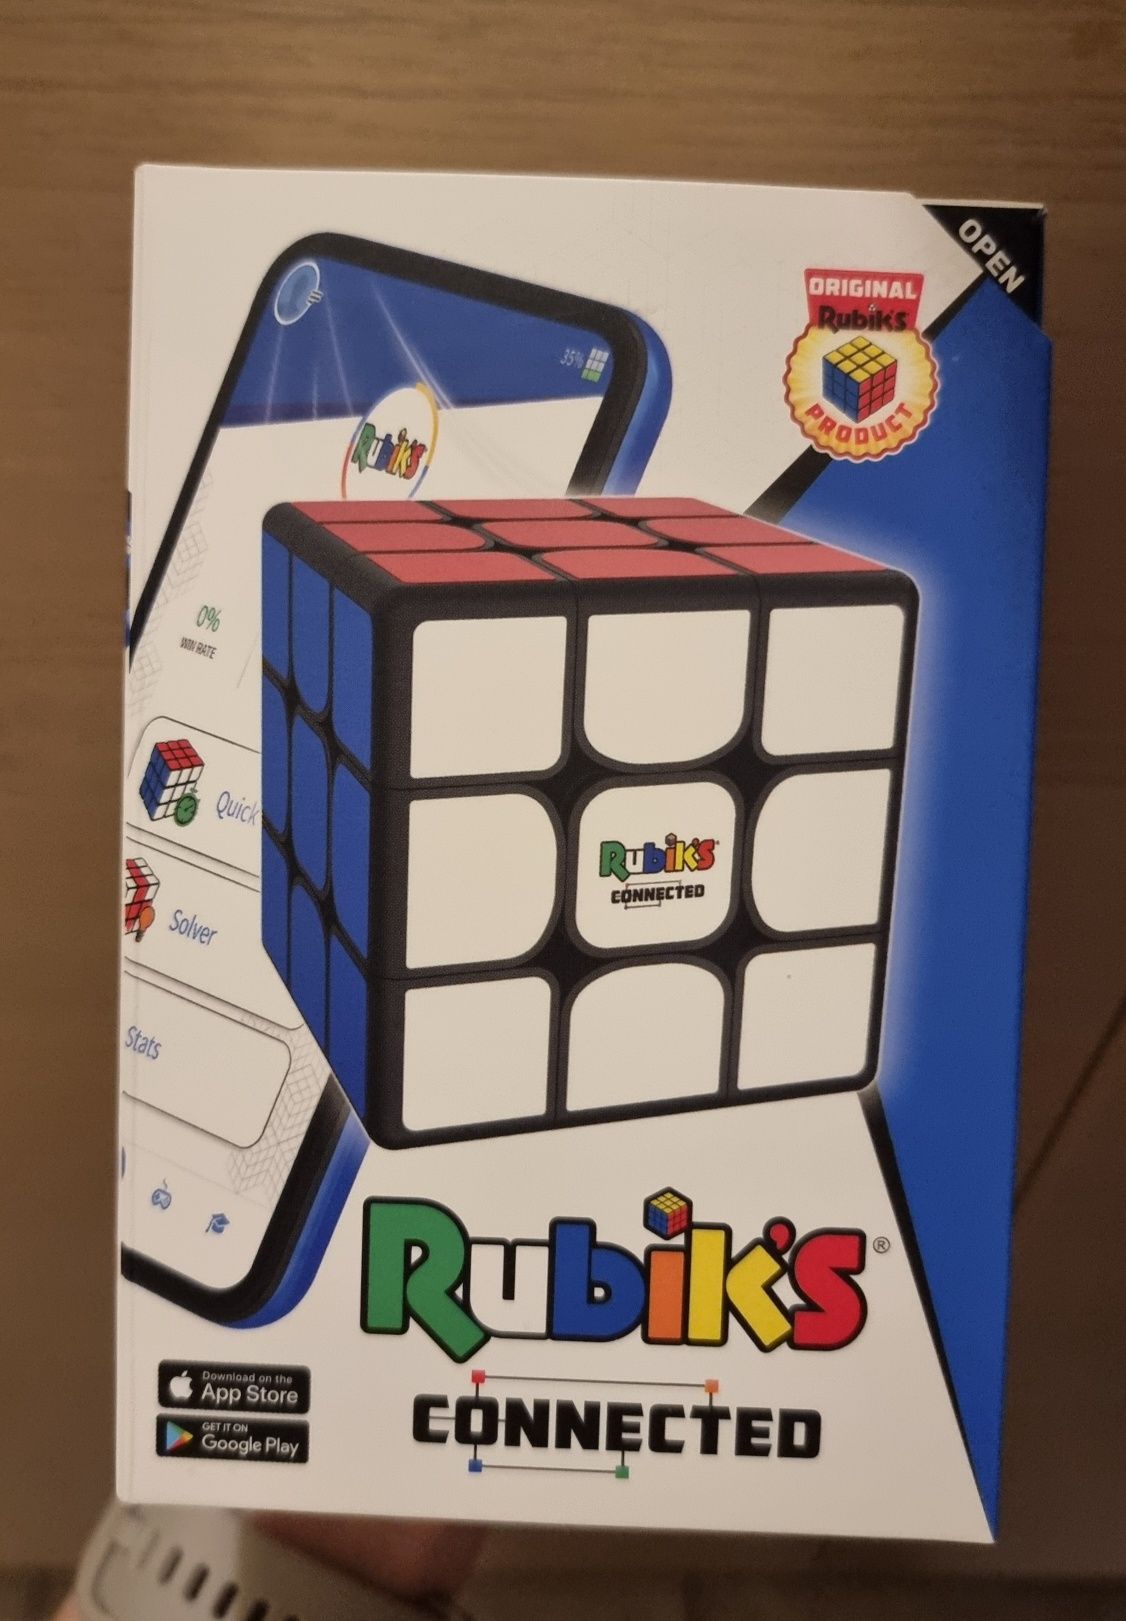 Cub rubik - GoCube Rubiks Connected AI Smart 3x3x3